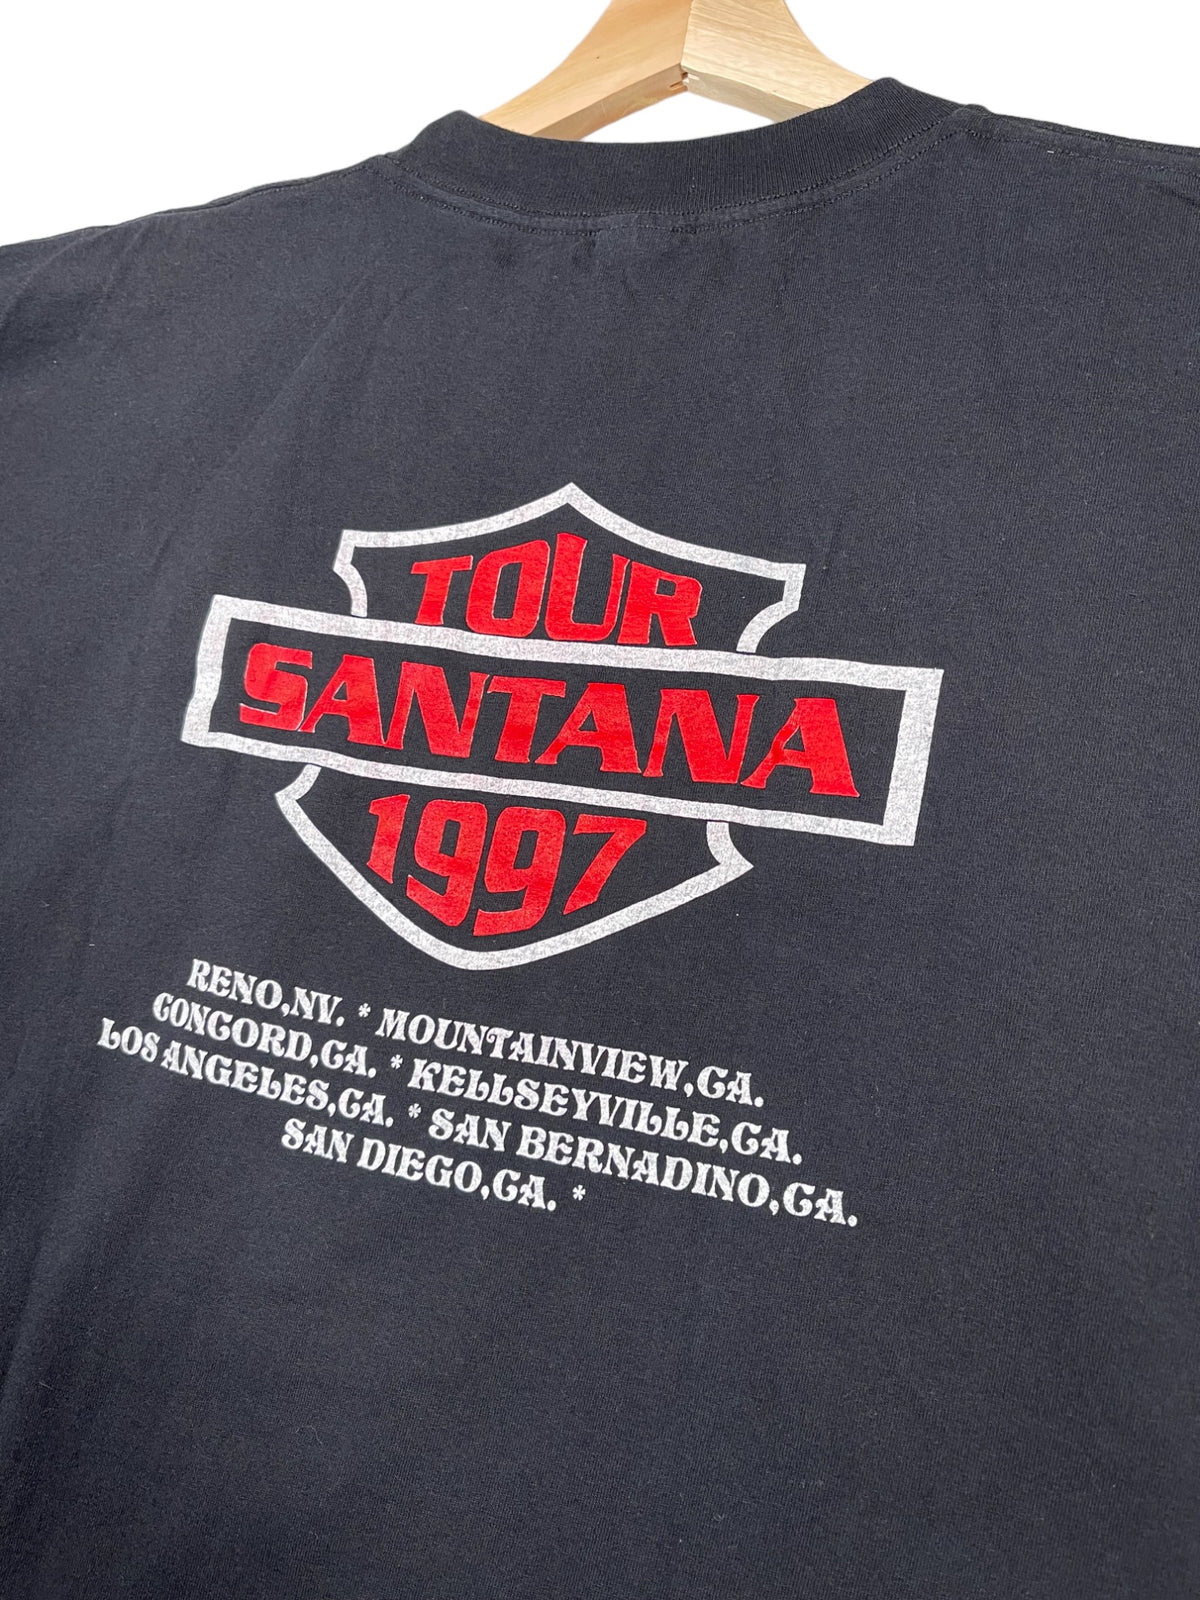 Vintage 1997 Santana Tour T-Shirt